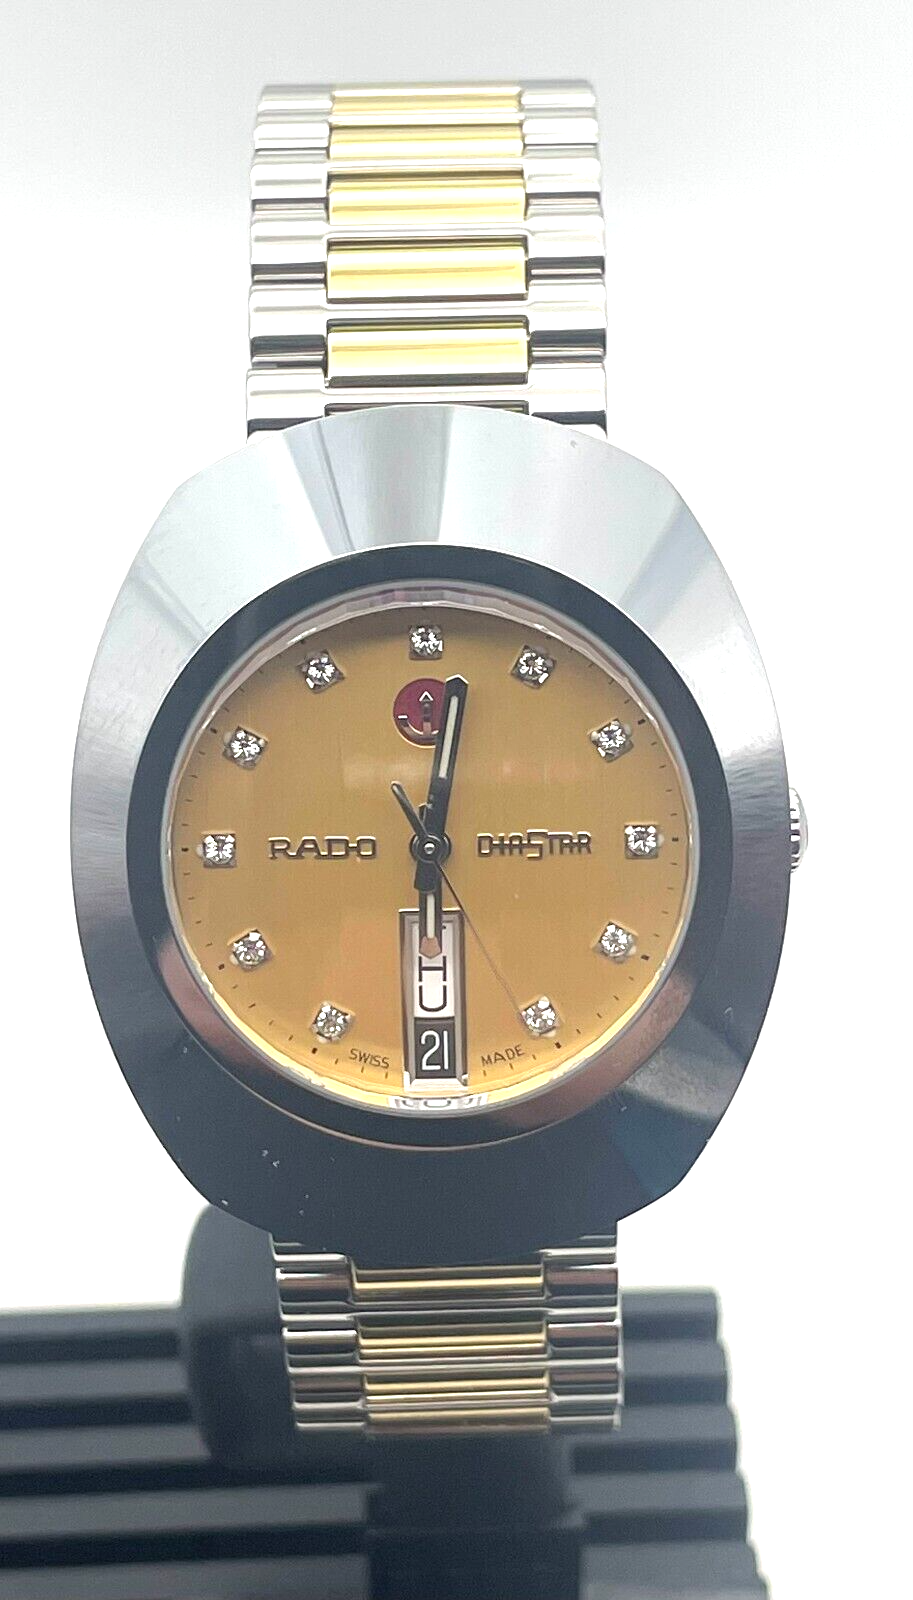 Rado The Original Automatic DiaStar Stainless Steel Men's Watch R12408633